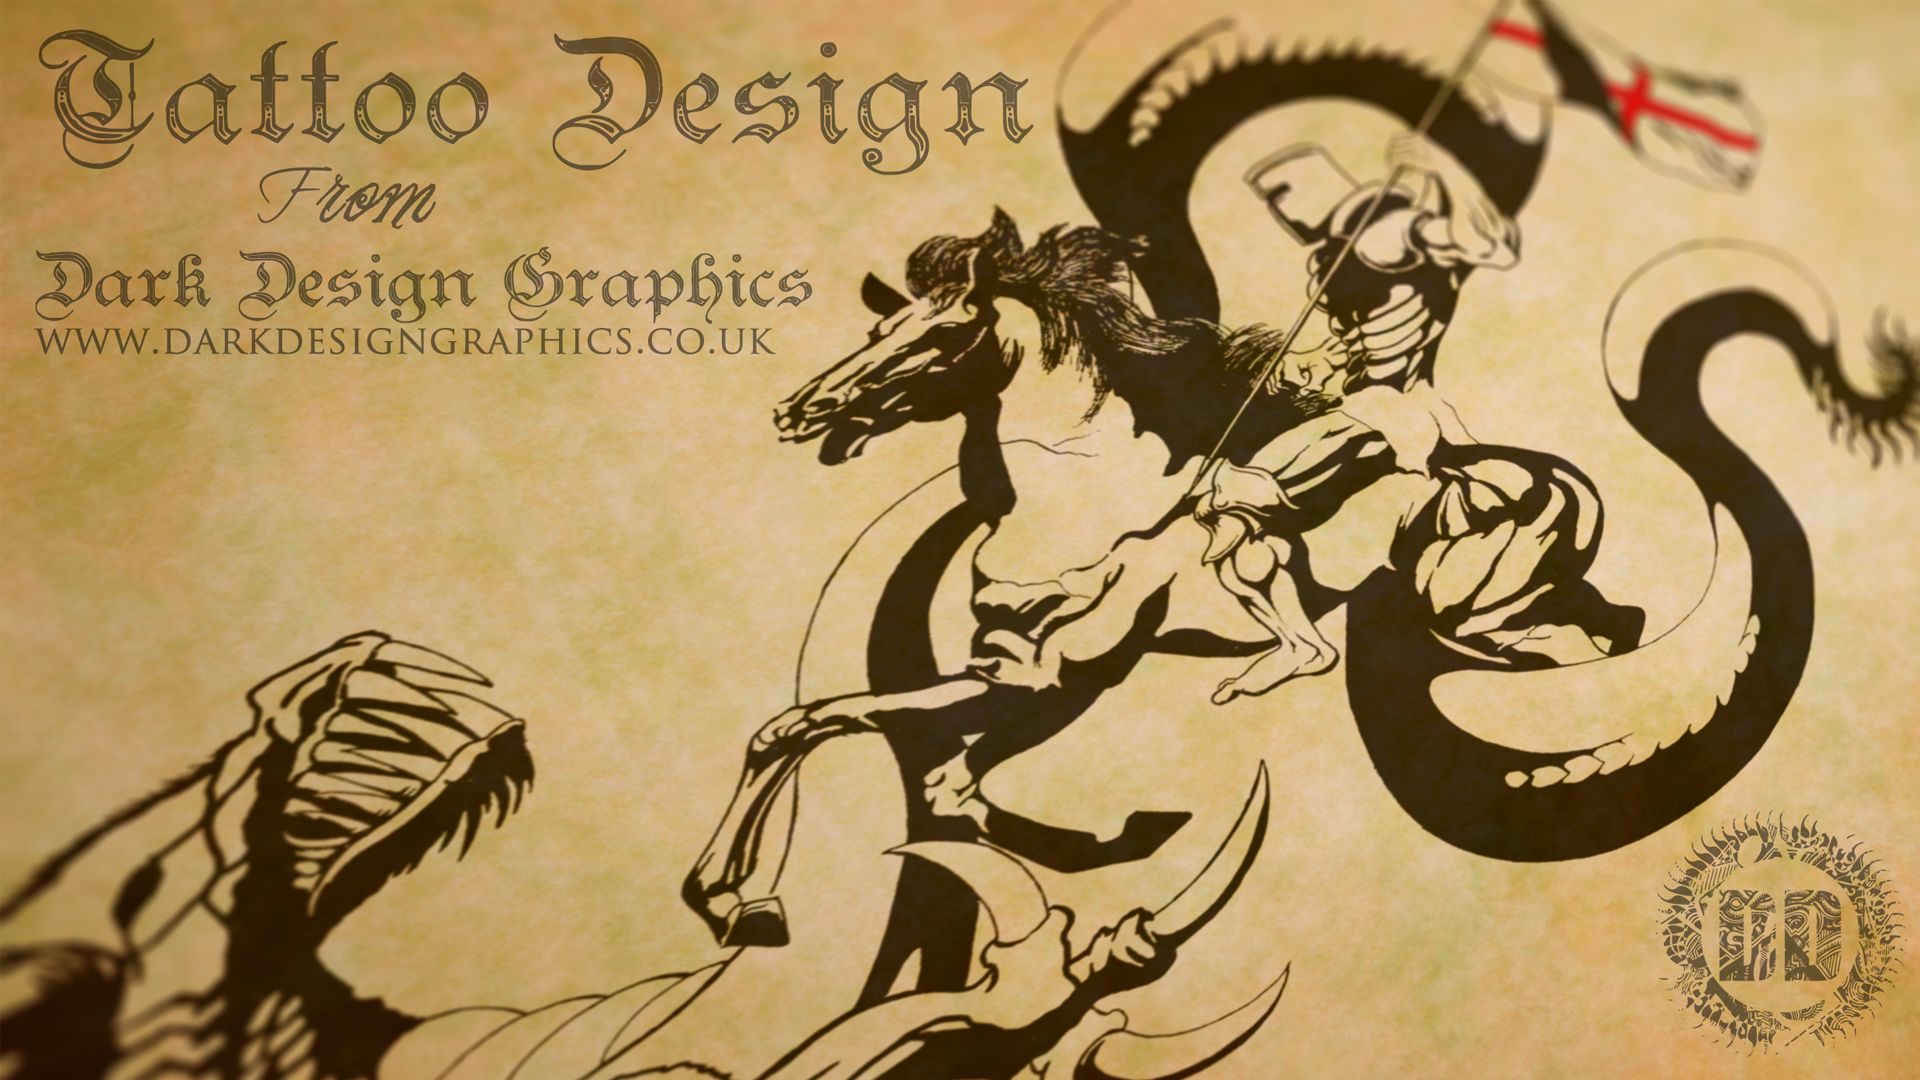 Saint George Wallpaper From Dark Design Graphics